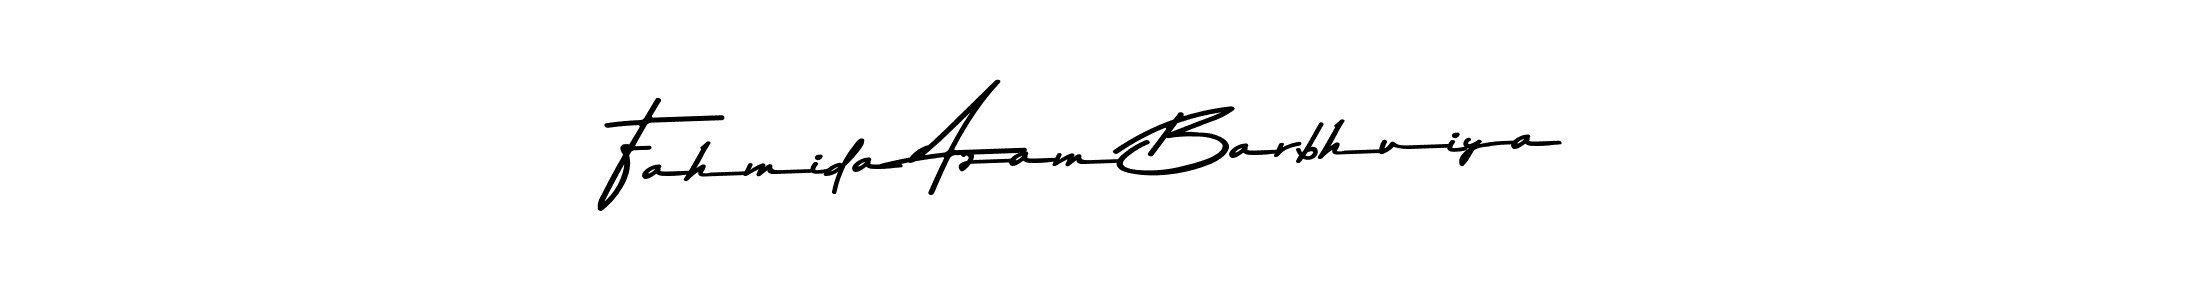 Make a beautiful signature design for name Fahmida Azam Barbhuiya. Use this online signature maker to create a handwritten signature for free. Fahmida Azam Barbhuiya signature style 9 images and pictures png